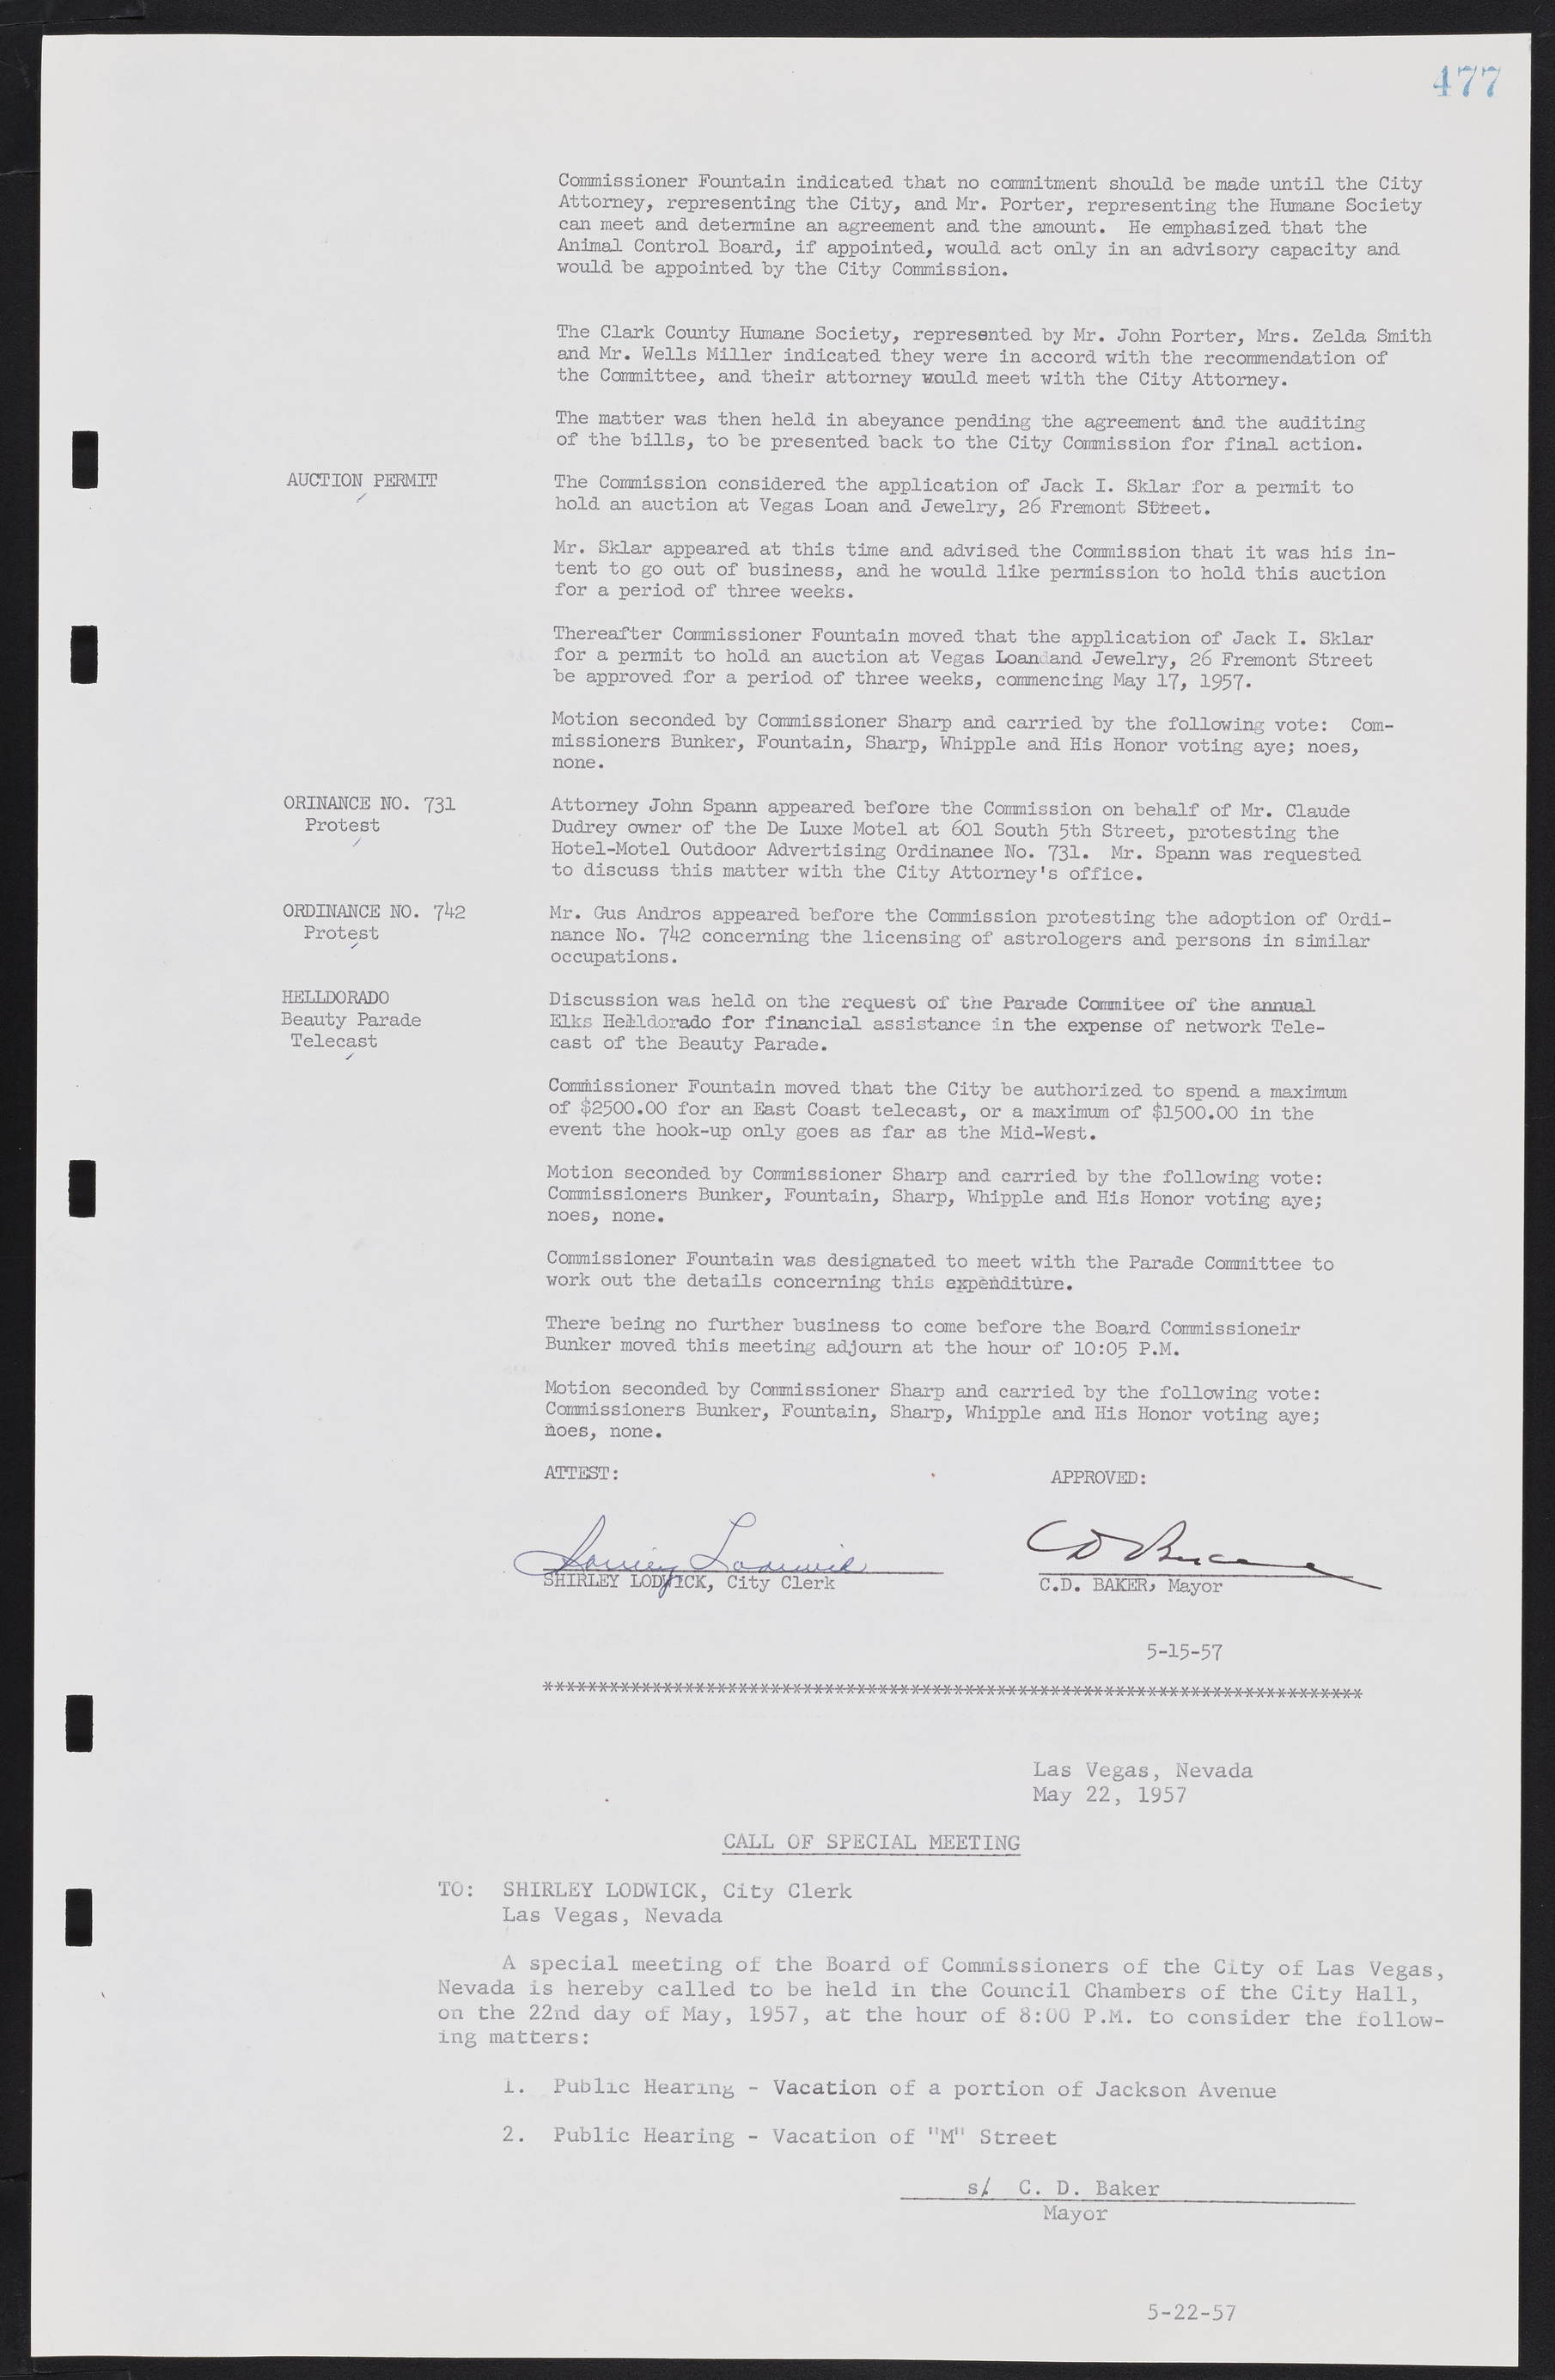 Las Vegas City Commission Minutes, September 21, 1955 to November 20, 1957, lvc000010-497